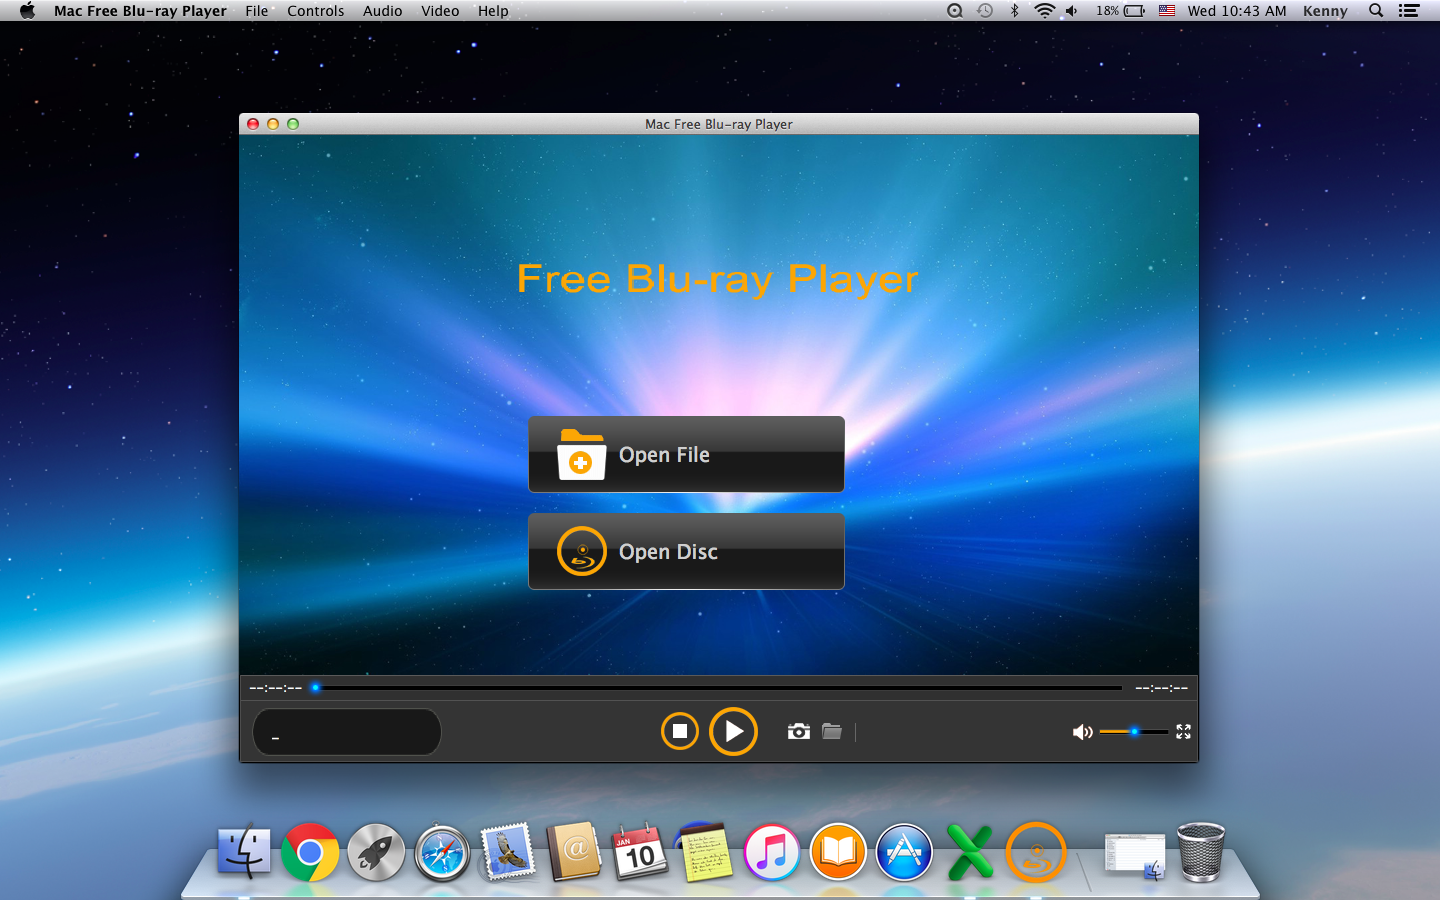 Mac Free Blu-ray Player 6.6.6 full